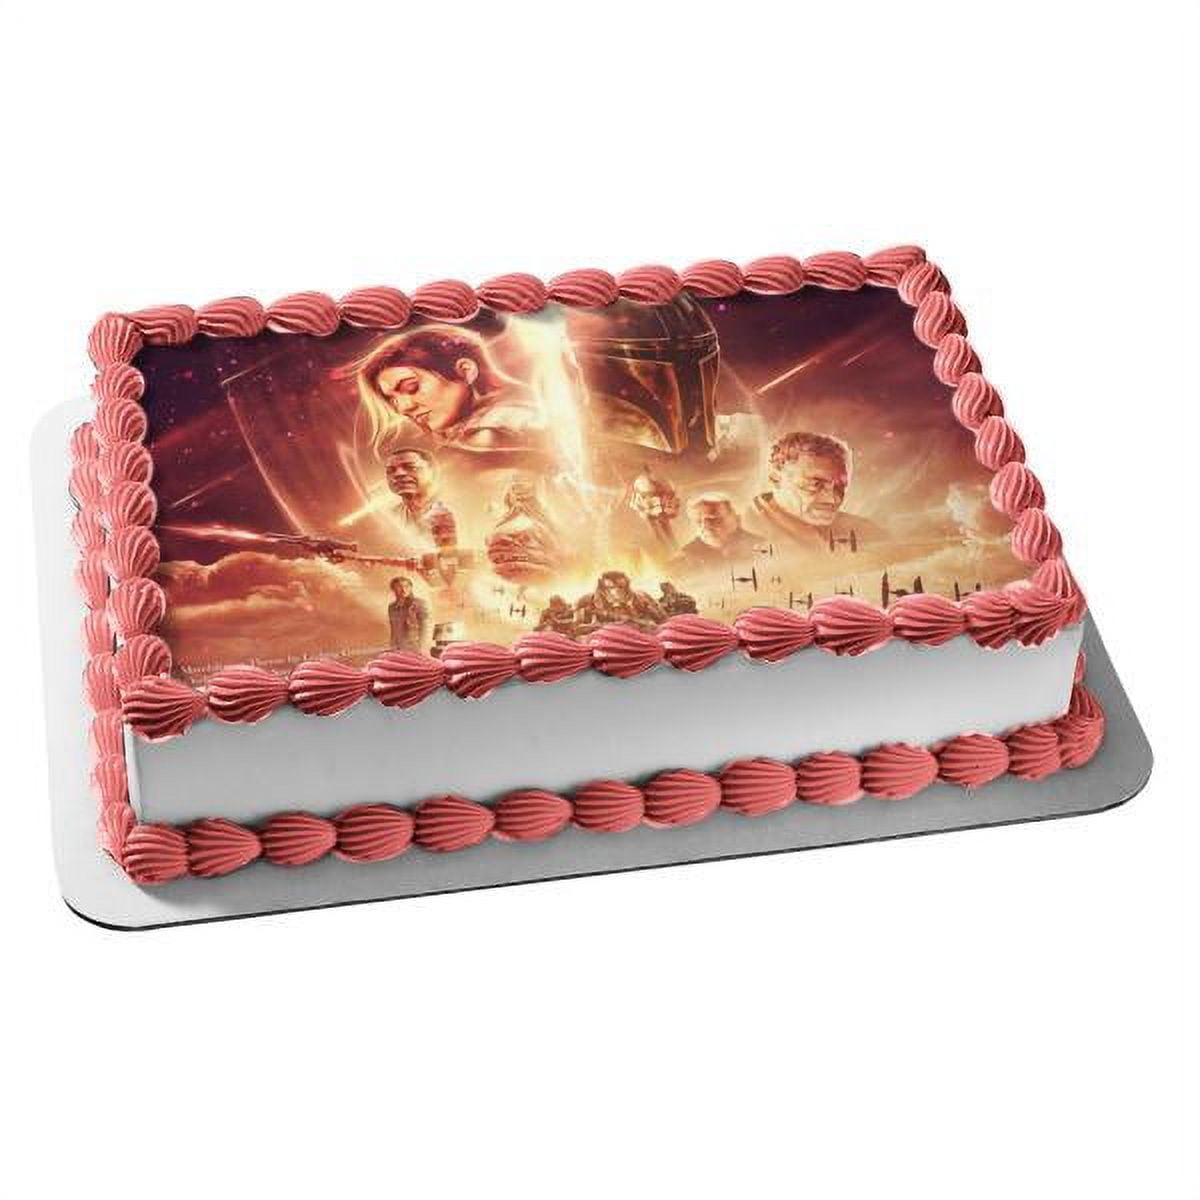 Baby Yoda Birthday Cakes photo